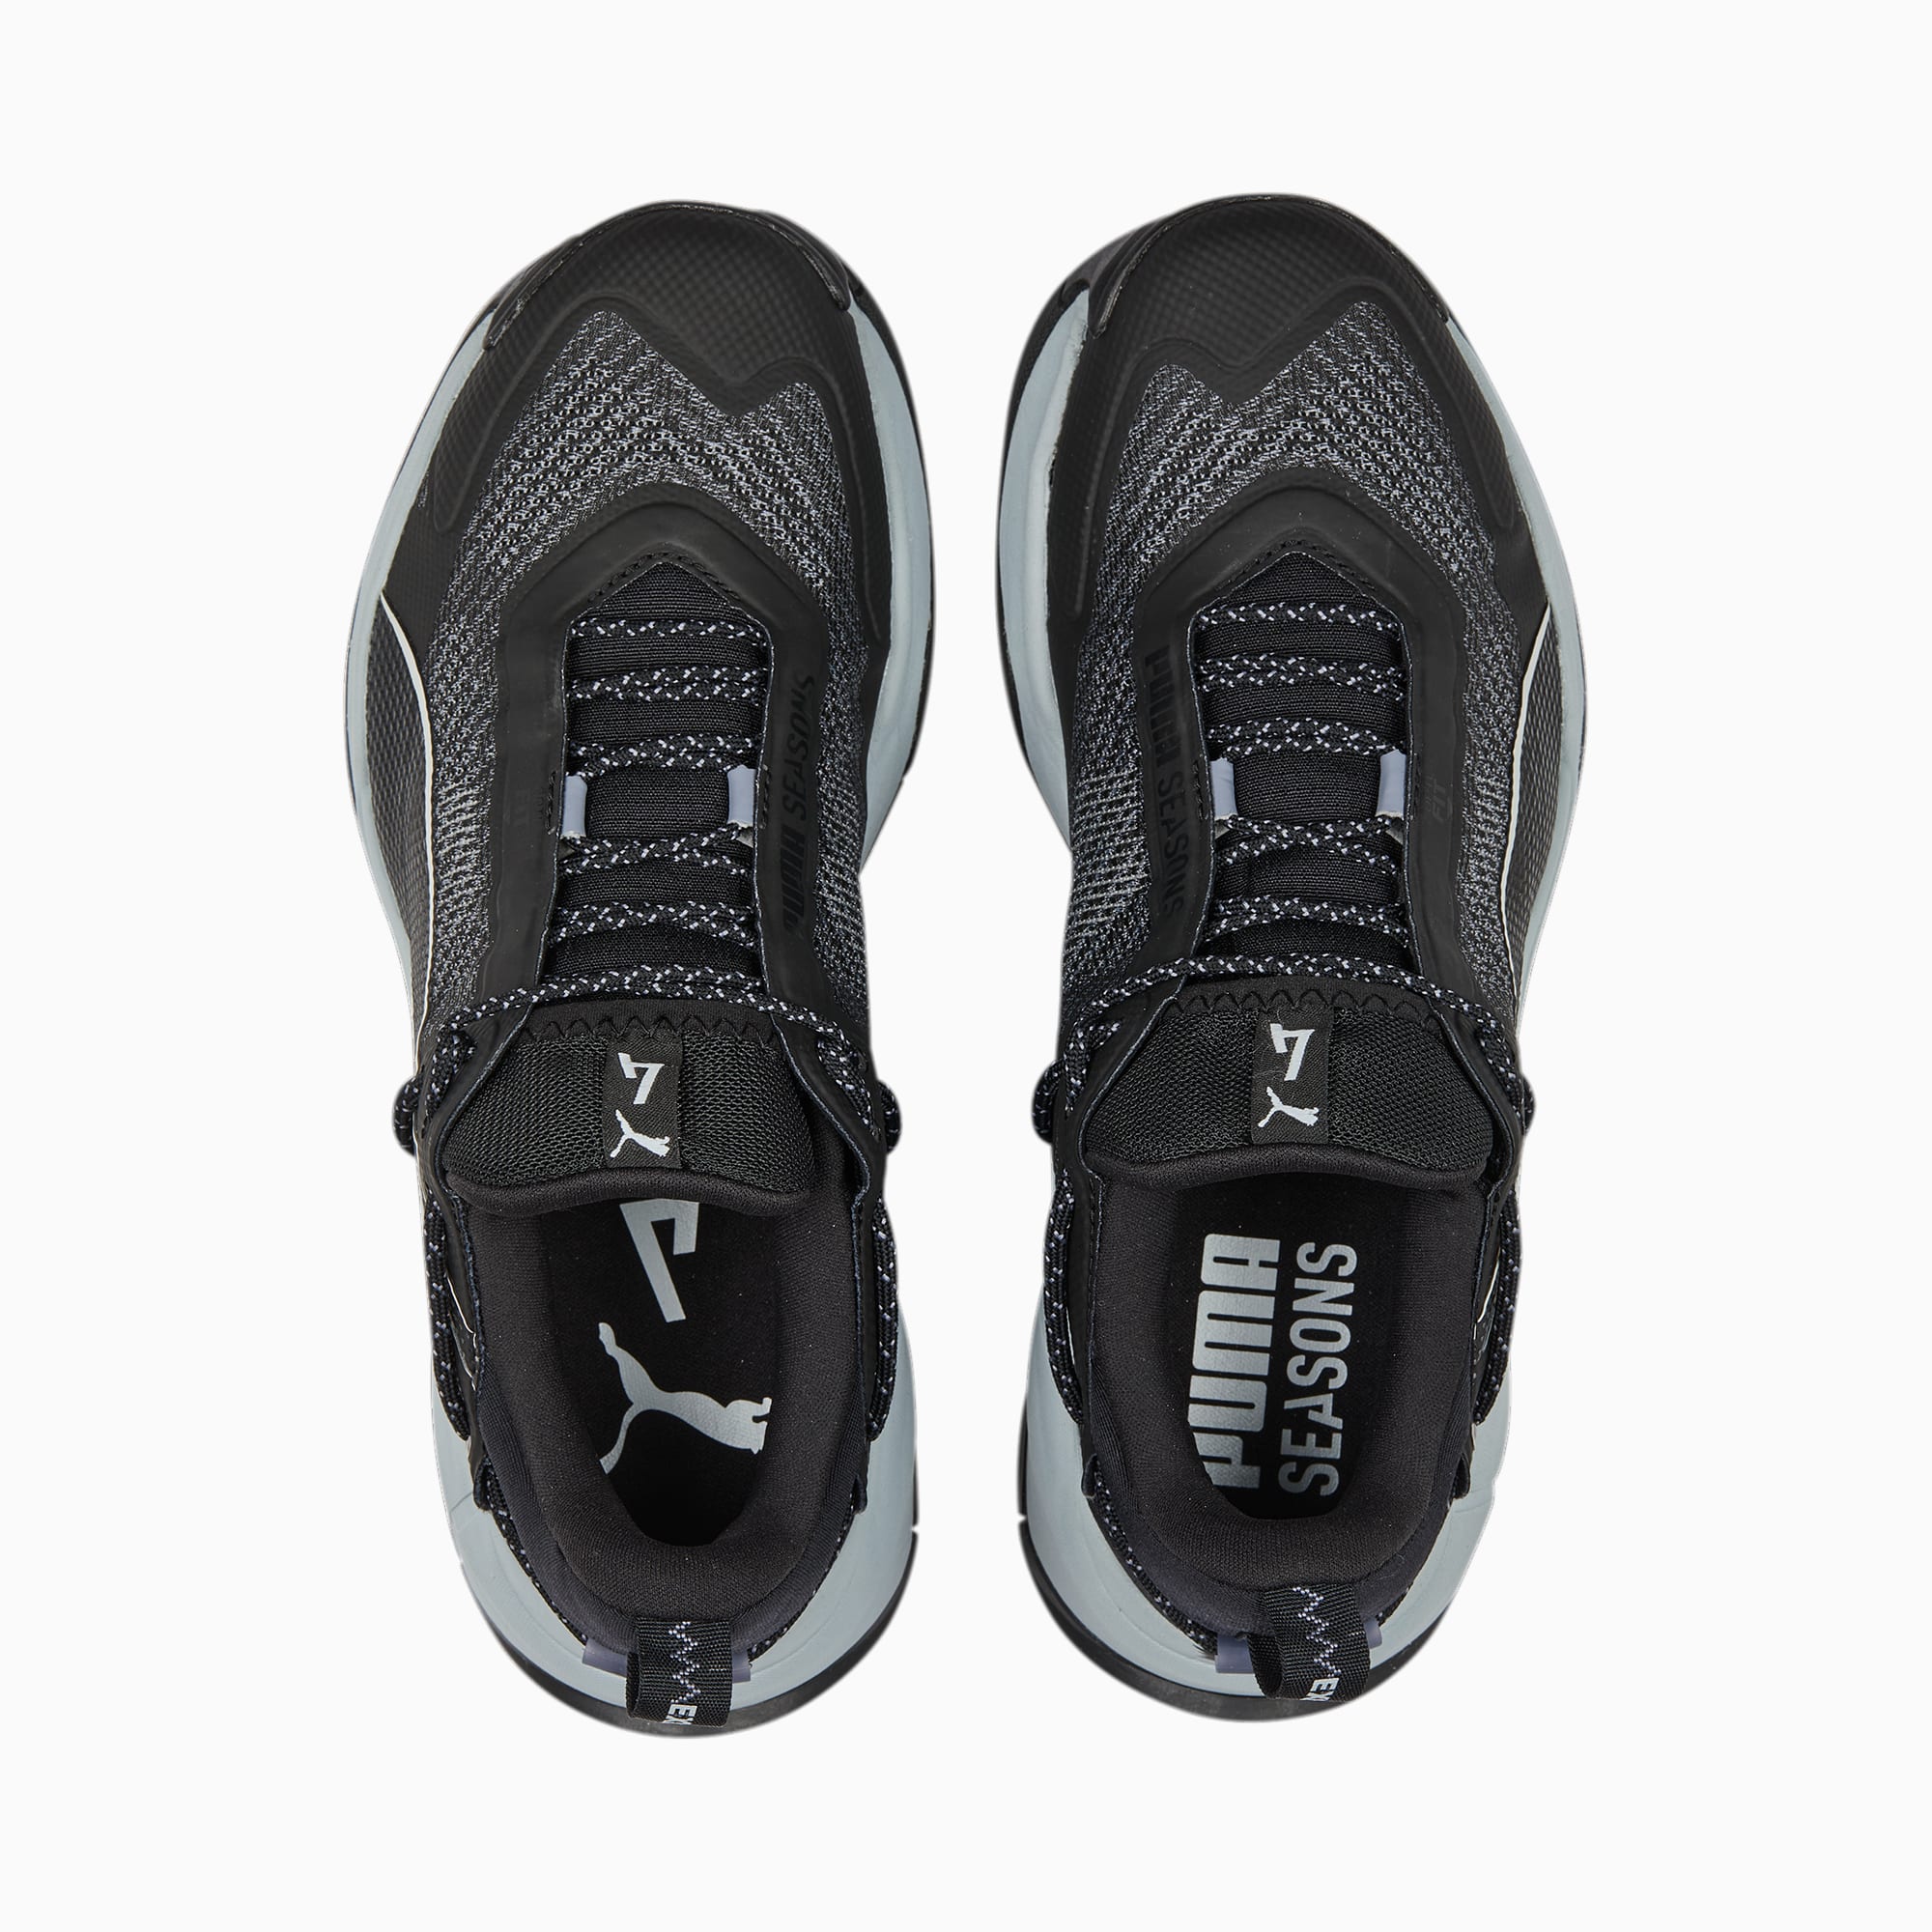 PUMA Explore Nitro™ Women's Hiking Shoes, Black/Platinum Grey